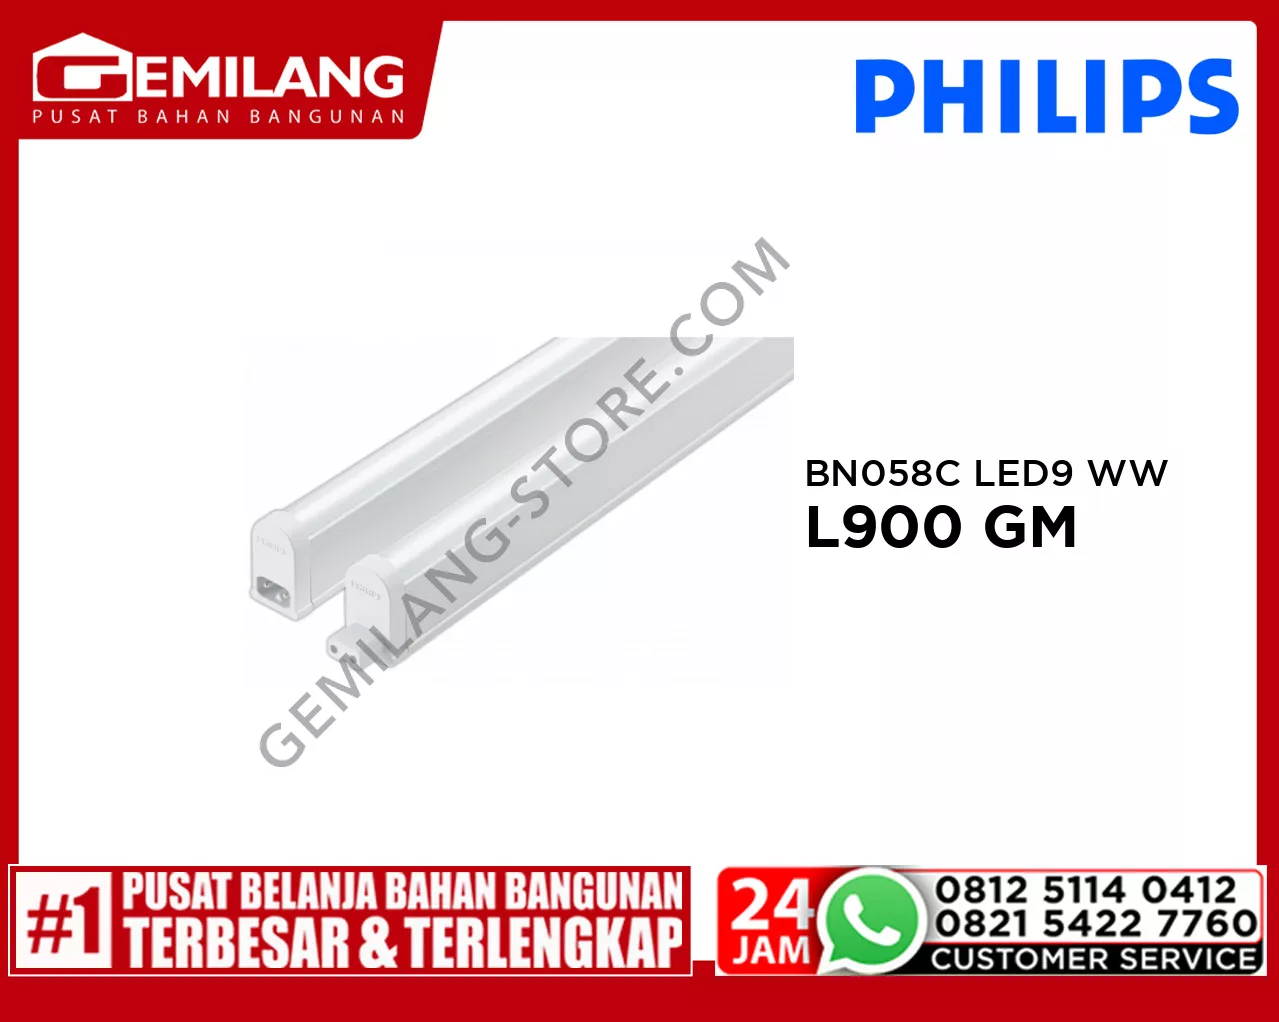 PHILIPS BN058C LED9 WW L900 GM